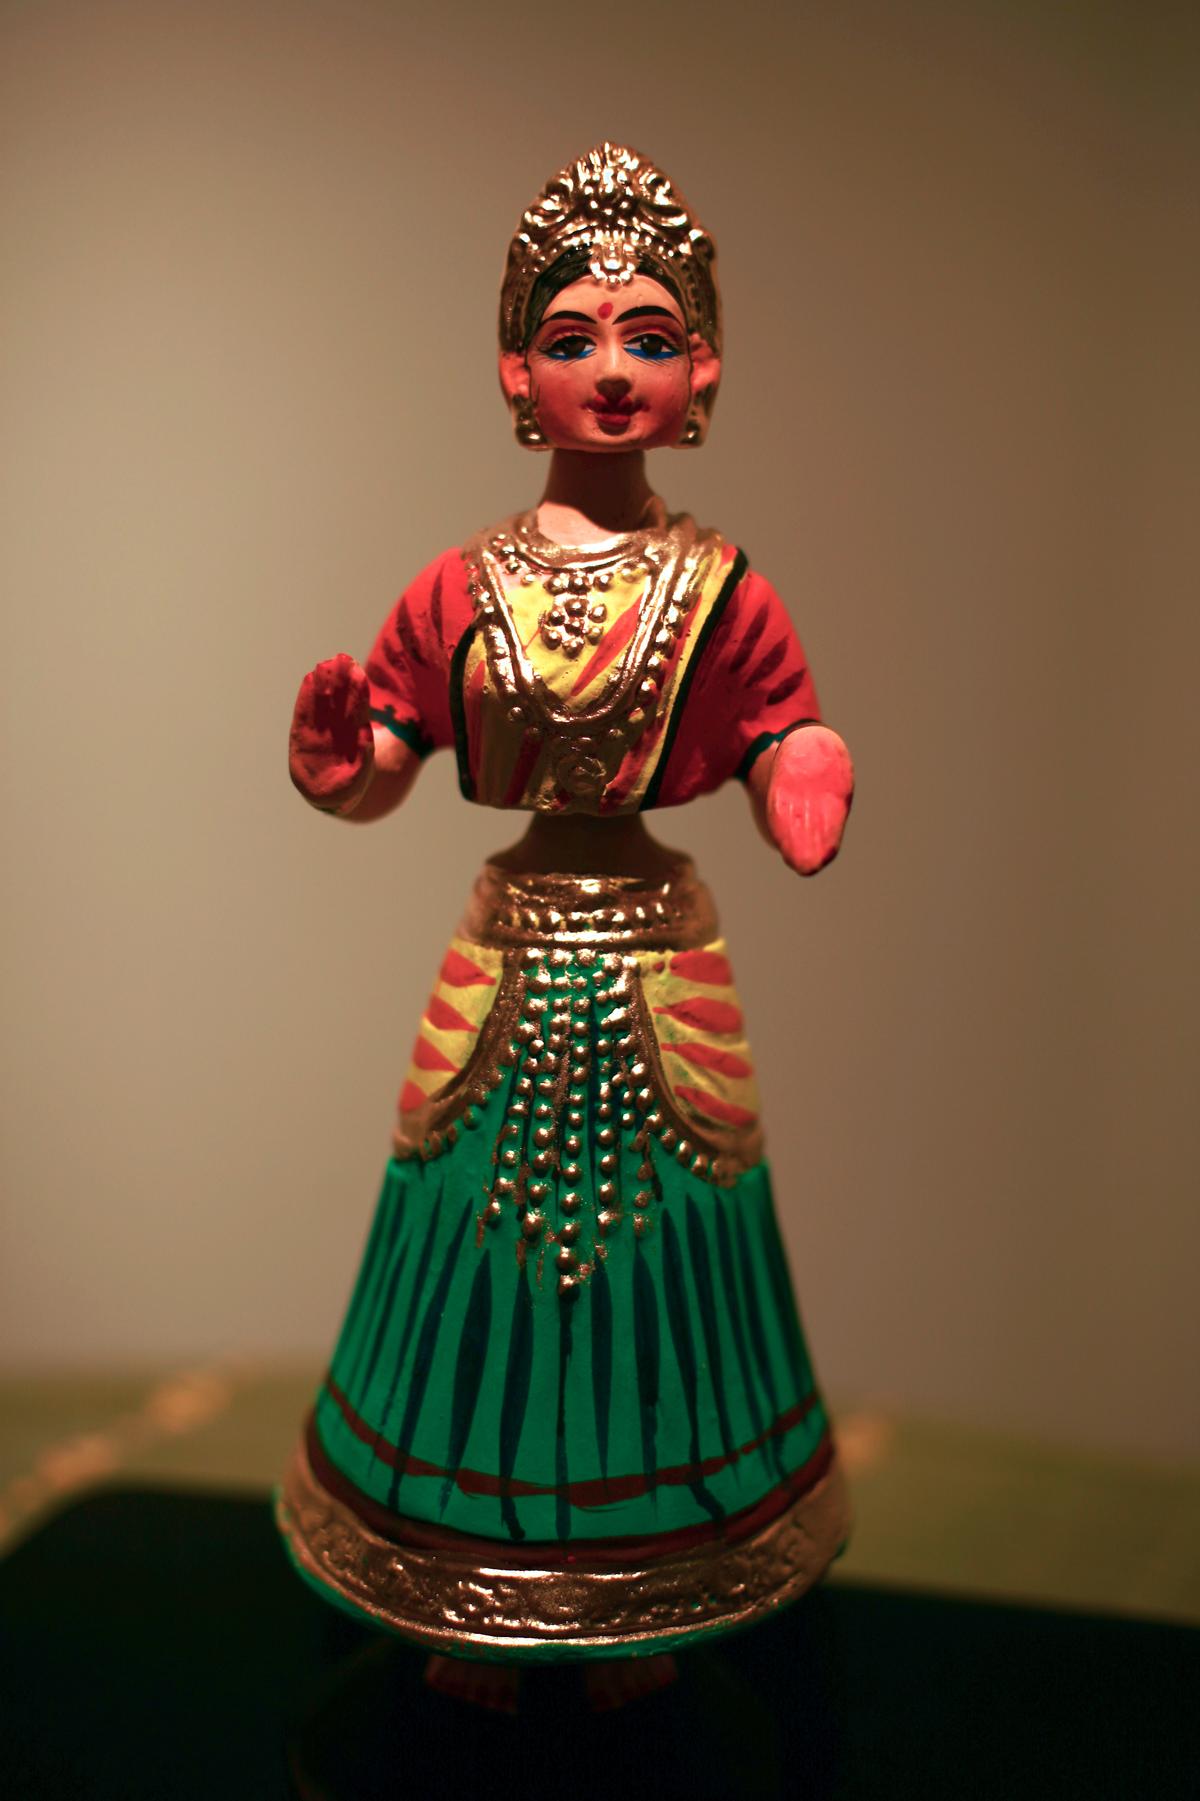 A Tanjavur doll. (<a href="https://creativecommons.org/licenses/by-sa/3.0/deed.en" target="_blank">Alamelu Sankaranarayanan/CC BY-SA</a>)